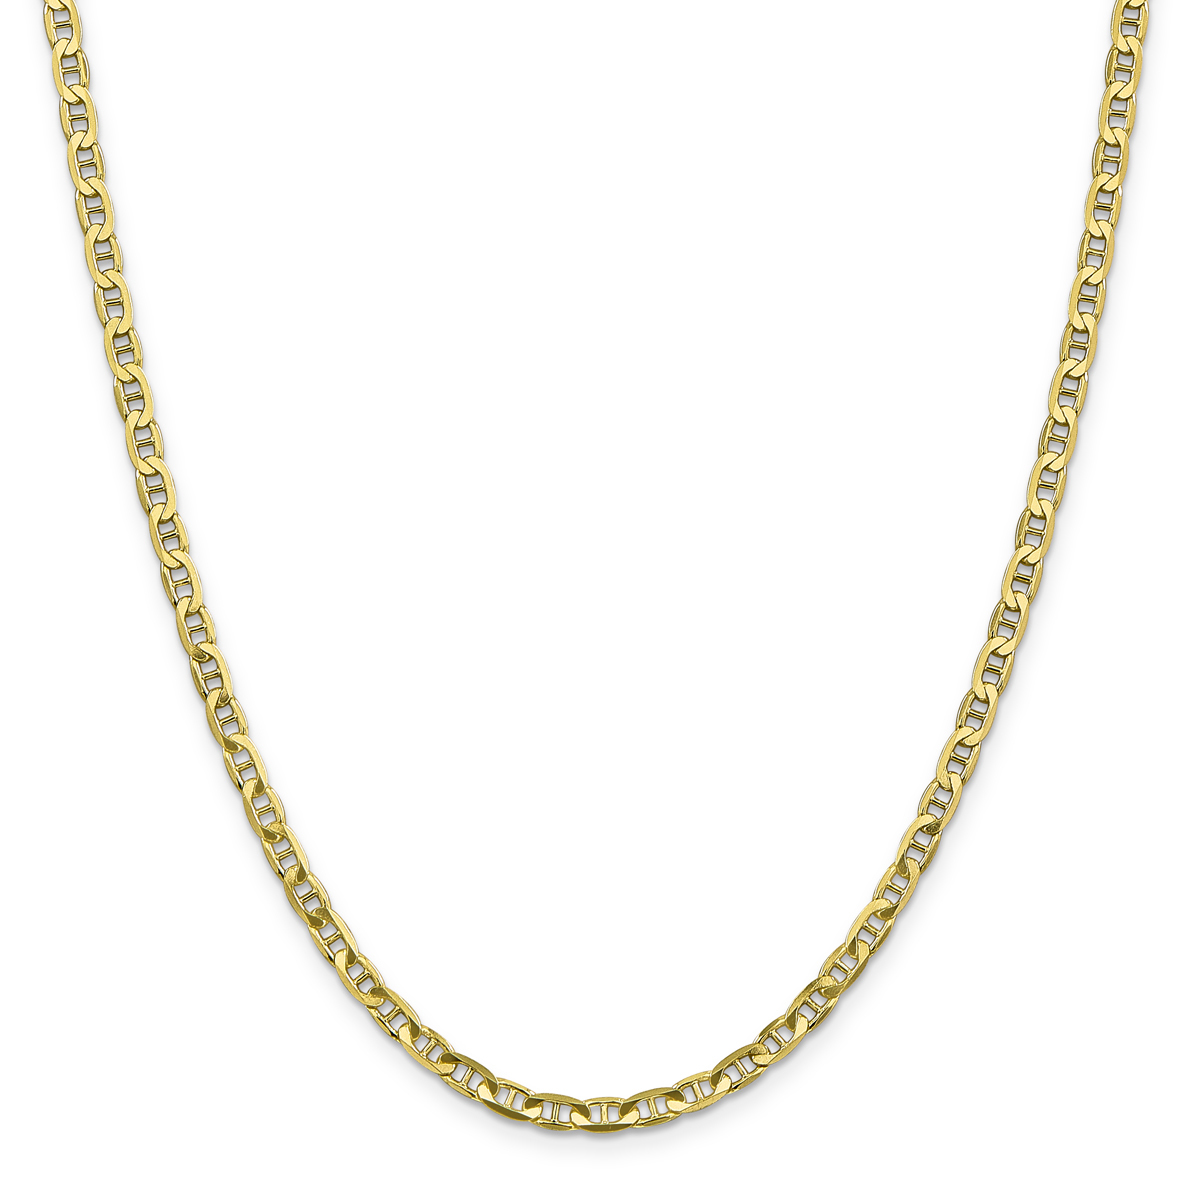 Unisex Gold Classics(tm)10kt. Gold 3.75mm Anchor Chain Link Bracelet